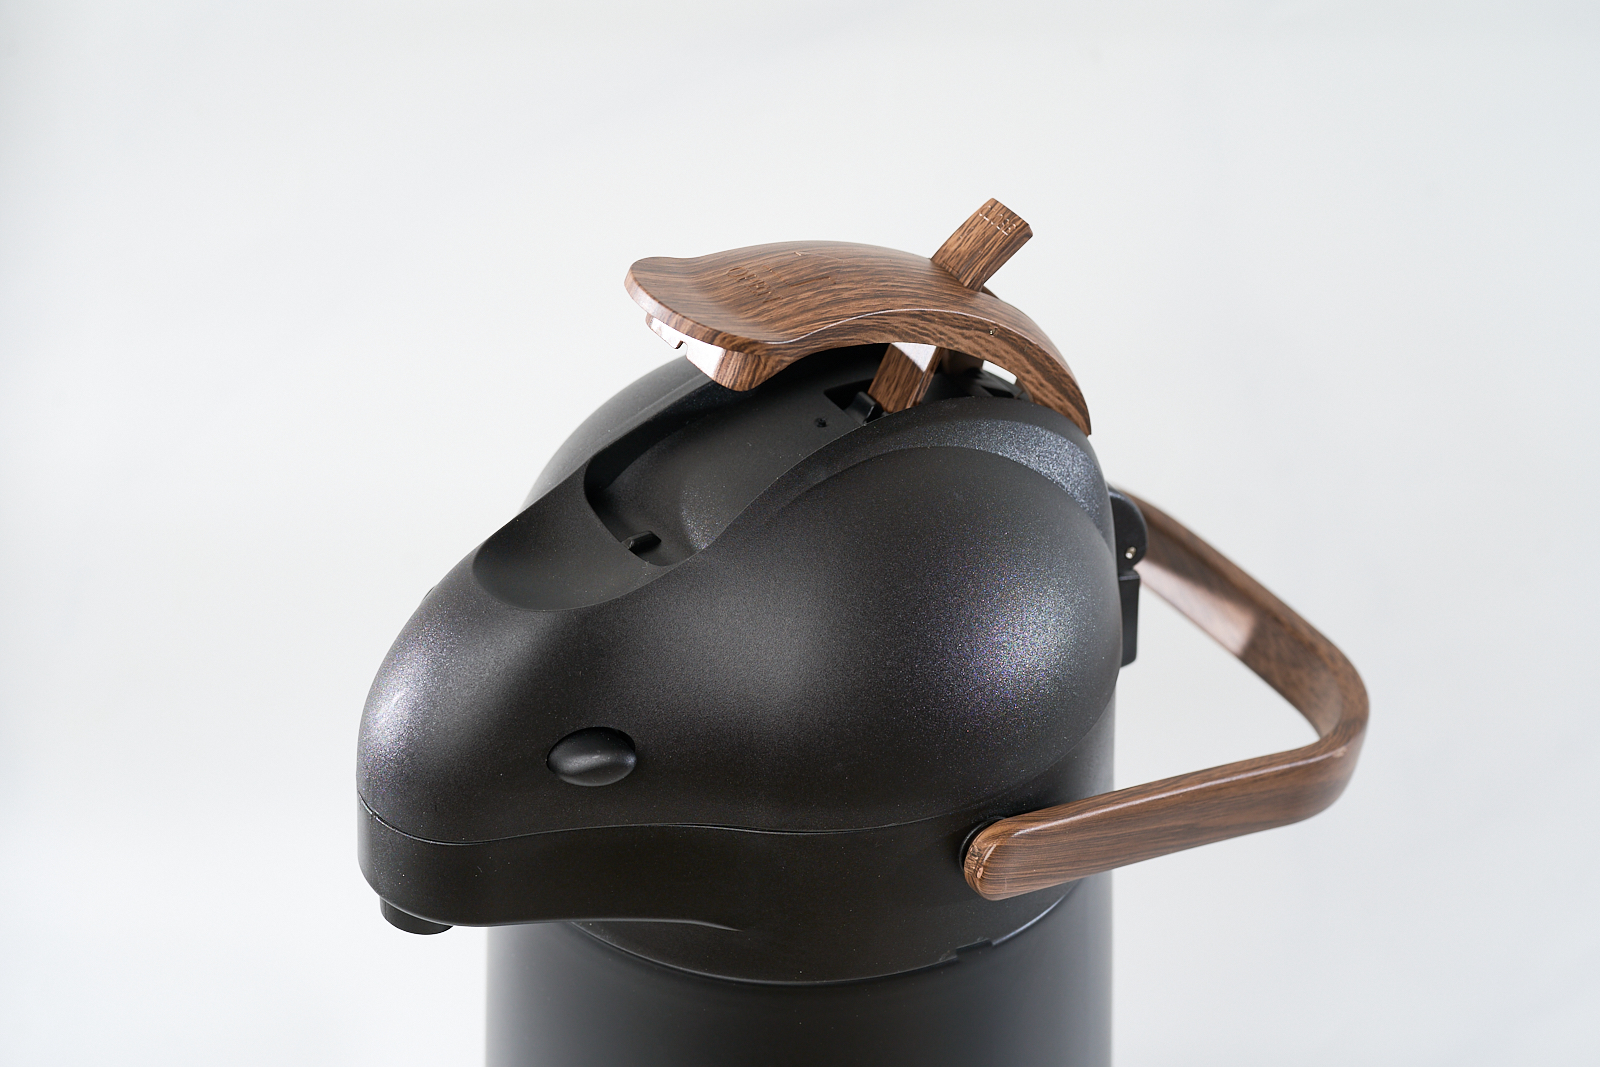 DSC06072 - Amazon hot sale wooden airpot coffee dispenser with pump 3 liter